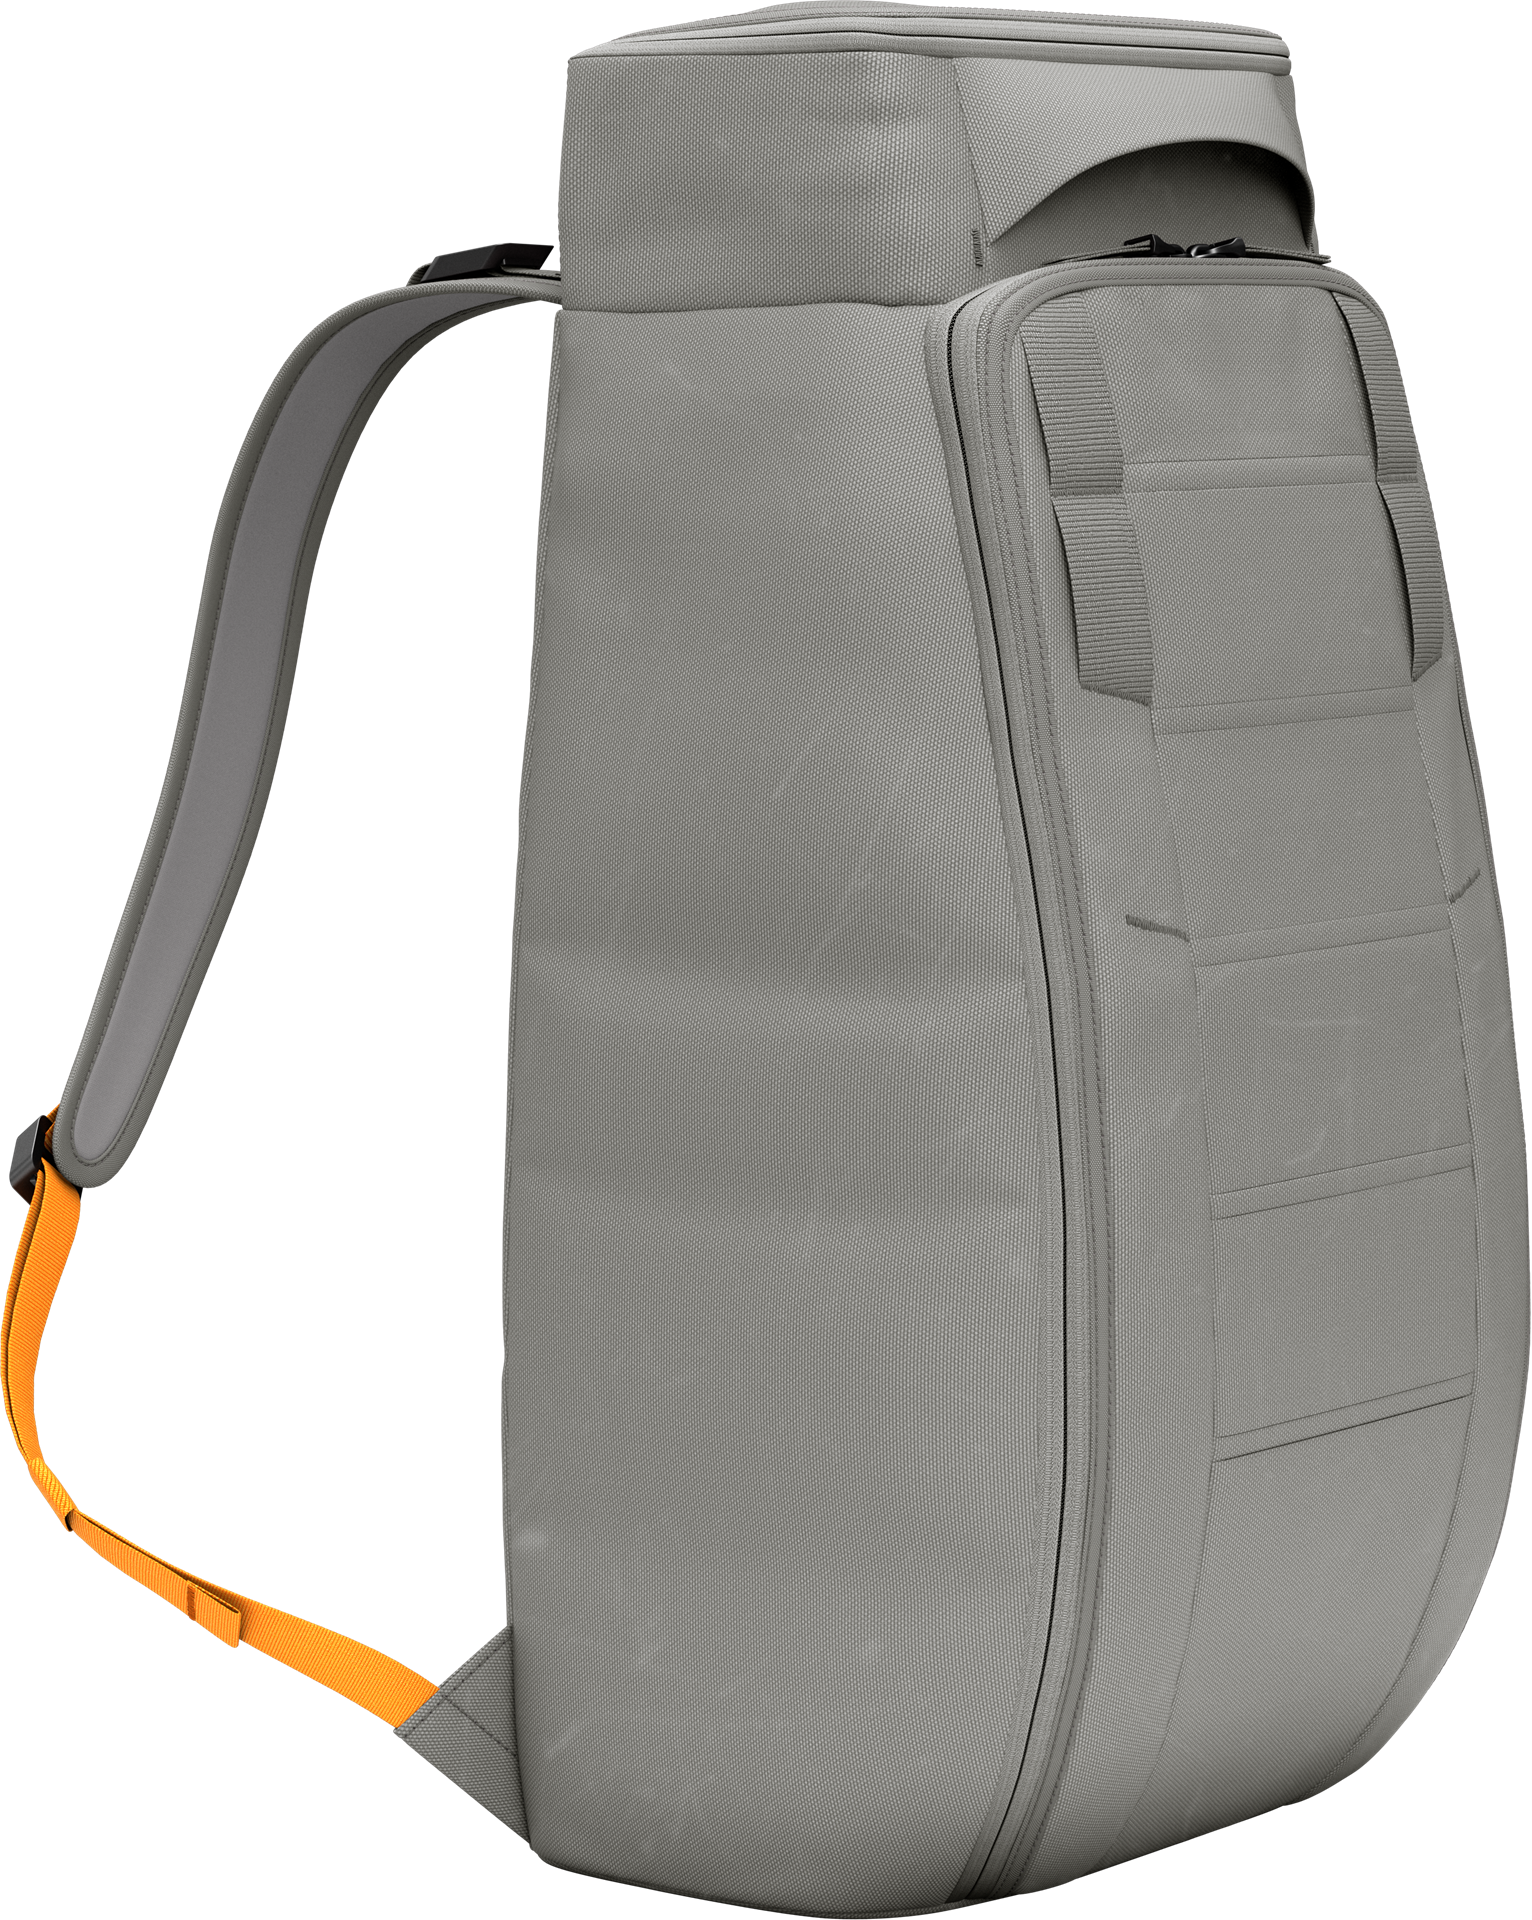 DB Journey Hugger Backpack - 30L - Sand Grey Rugzak - Reisartikelen-nl